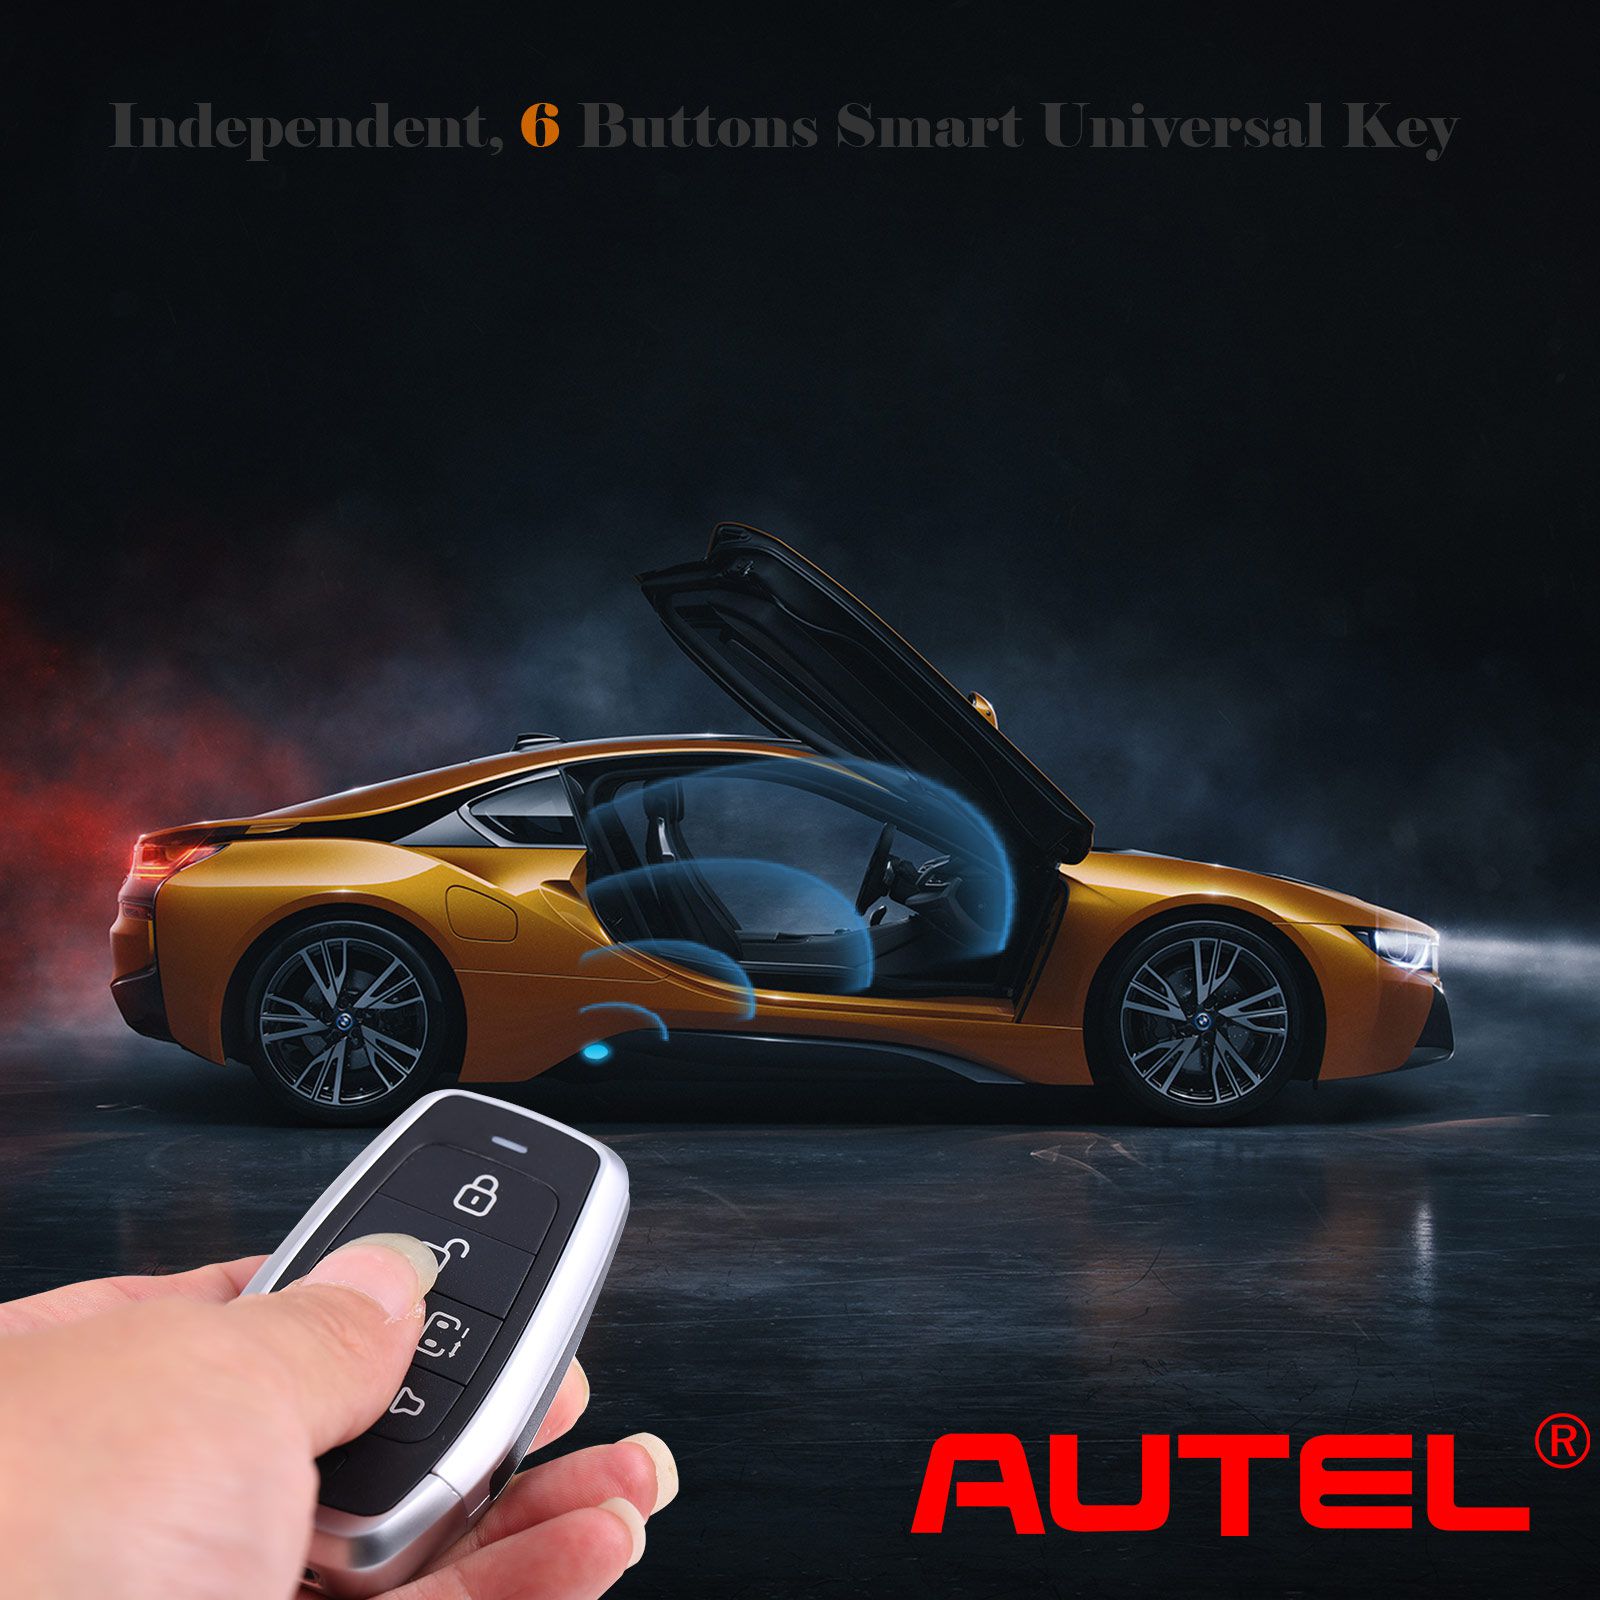 Autel ikeyat006bl 6 botones clave inteligente universal independiente 5 piezas / lote